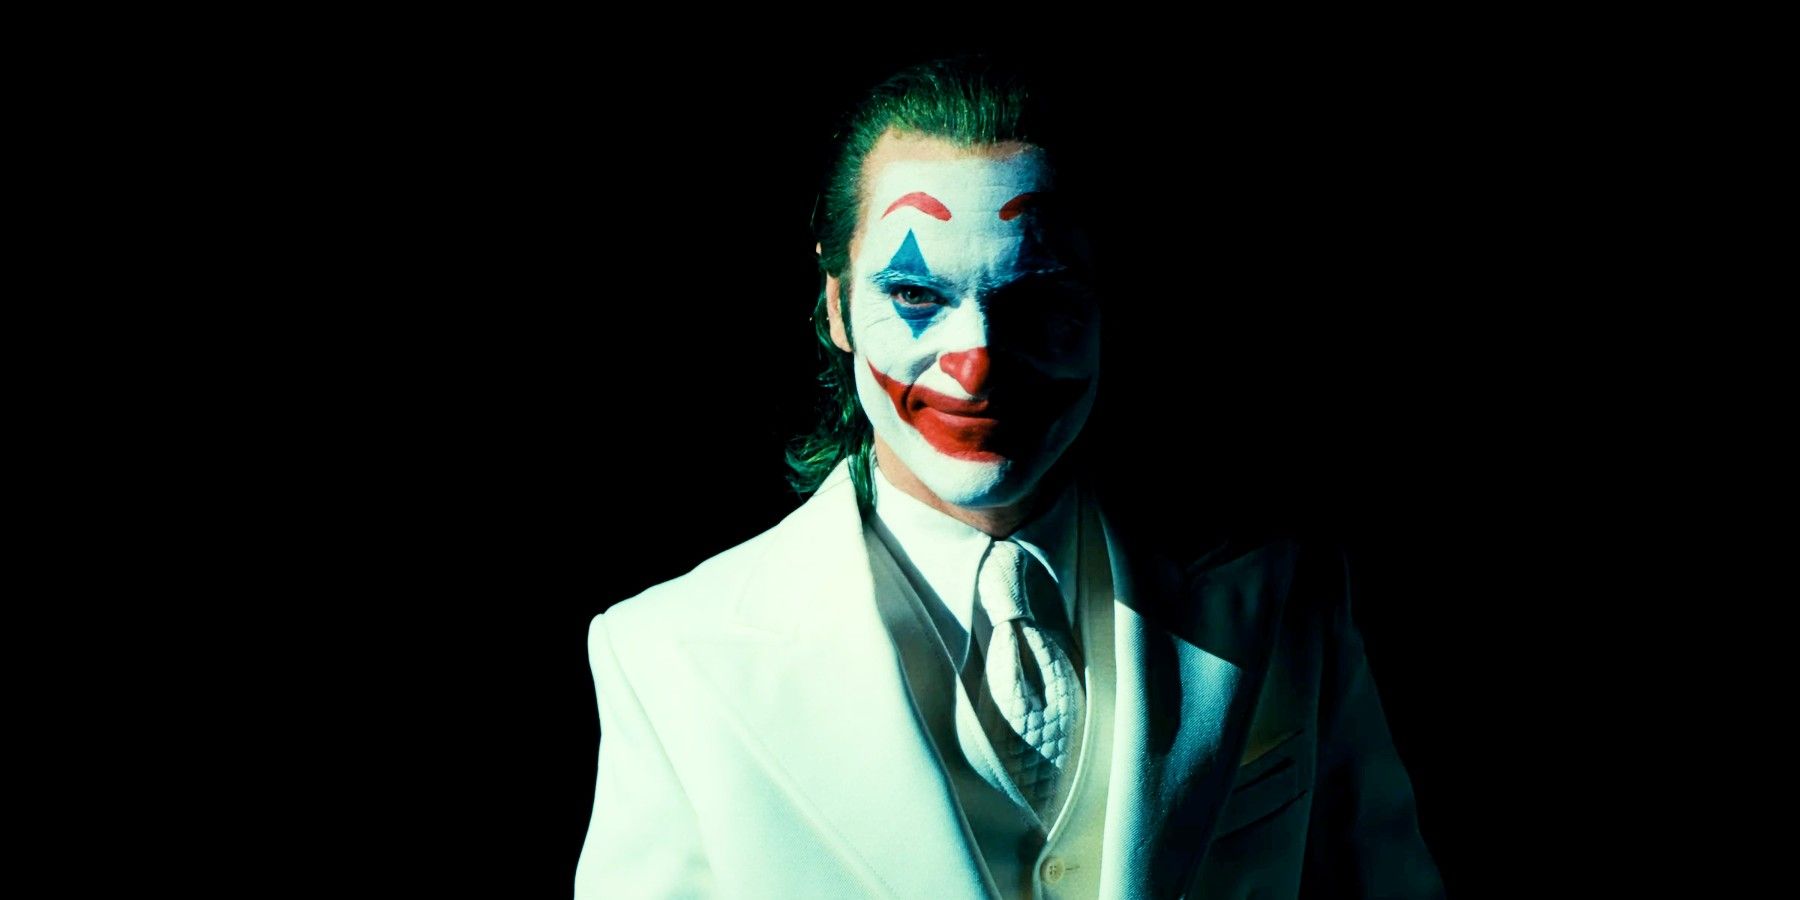 Joaquin Phoenix as Arthur Fleck in Joker make-up and white suit in Joker Folie A Deux